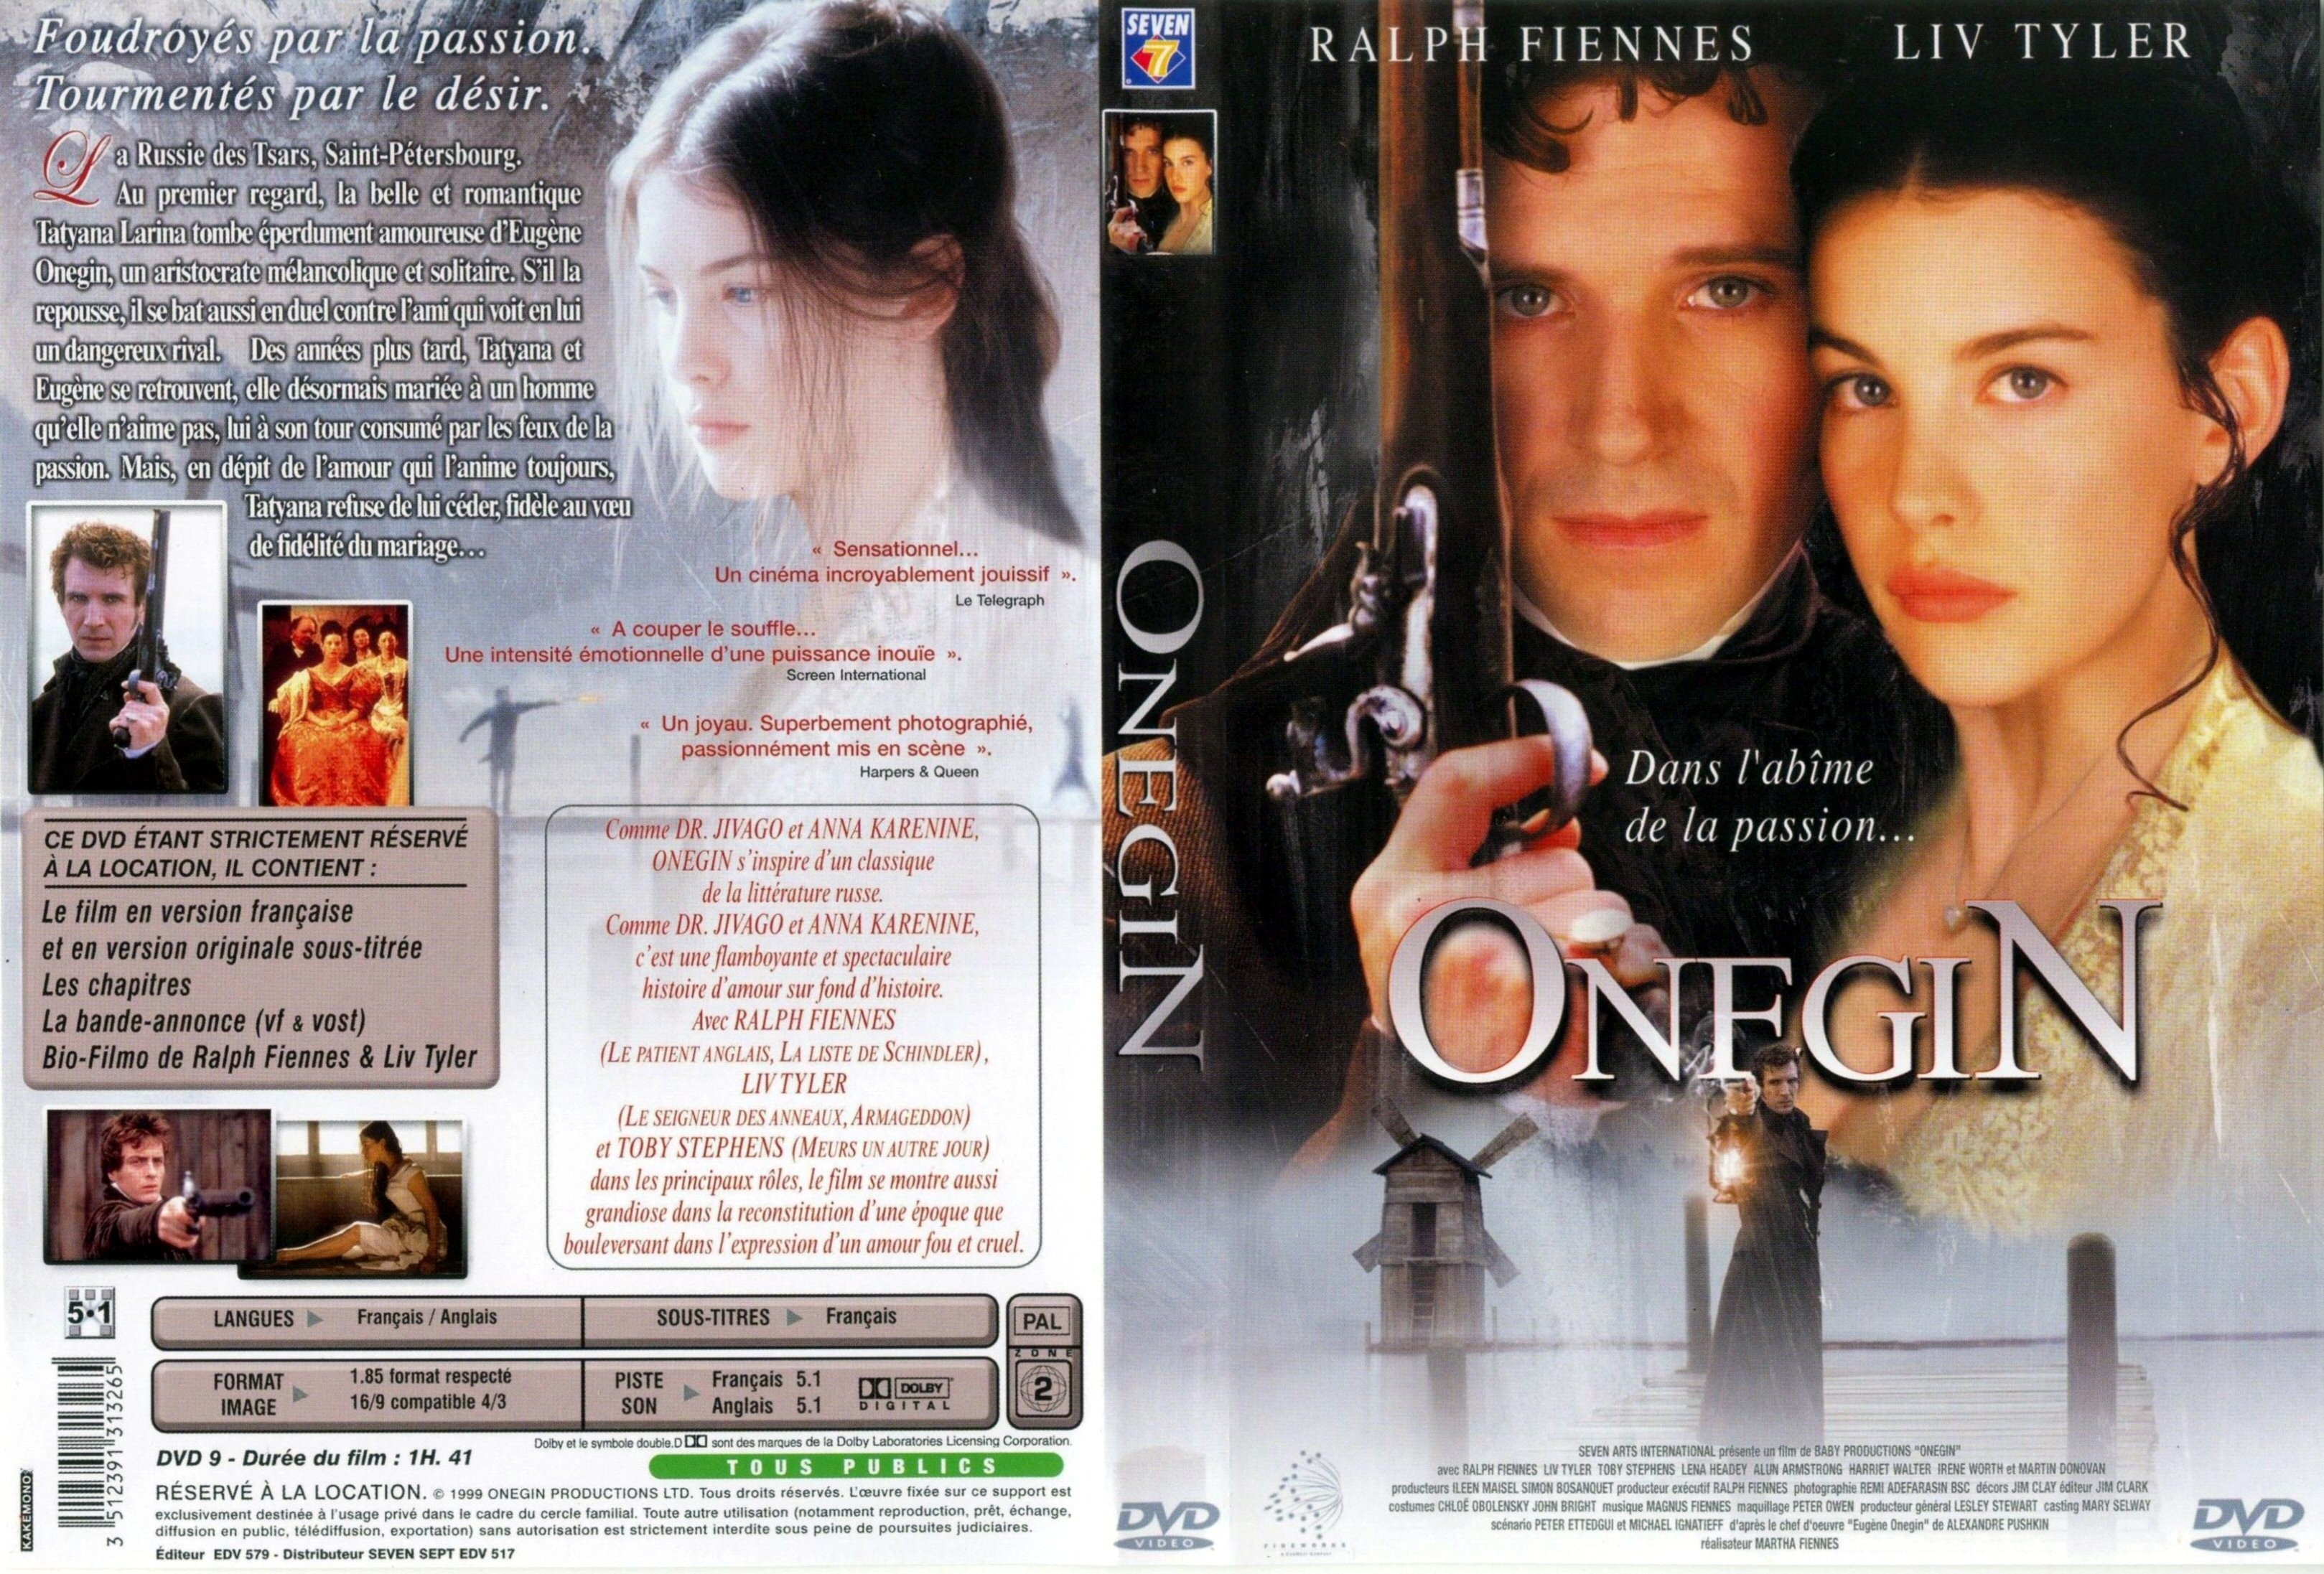 Jaquette DVD Onegin